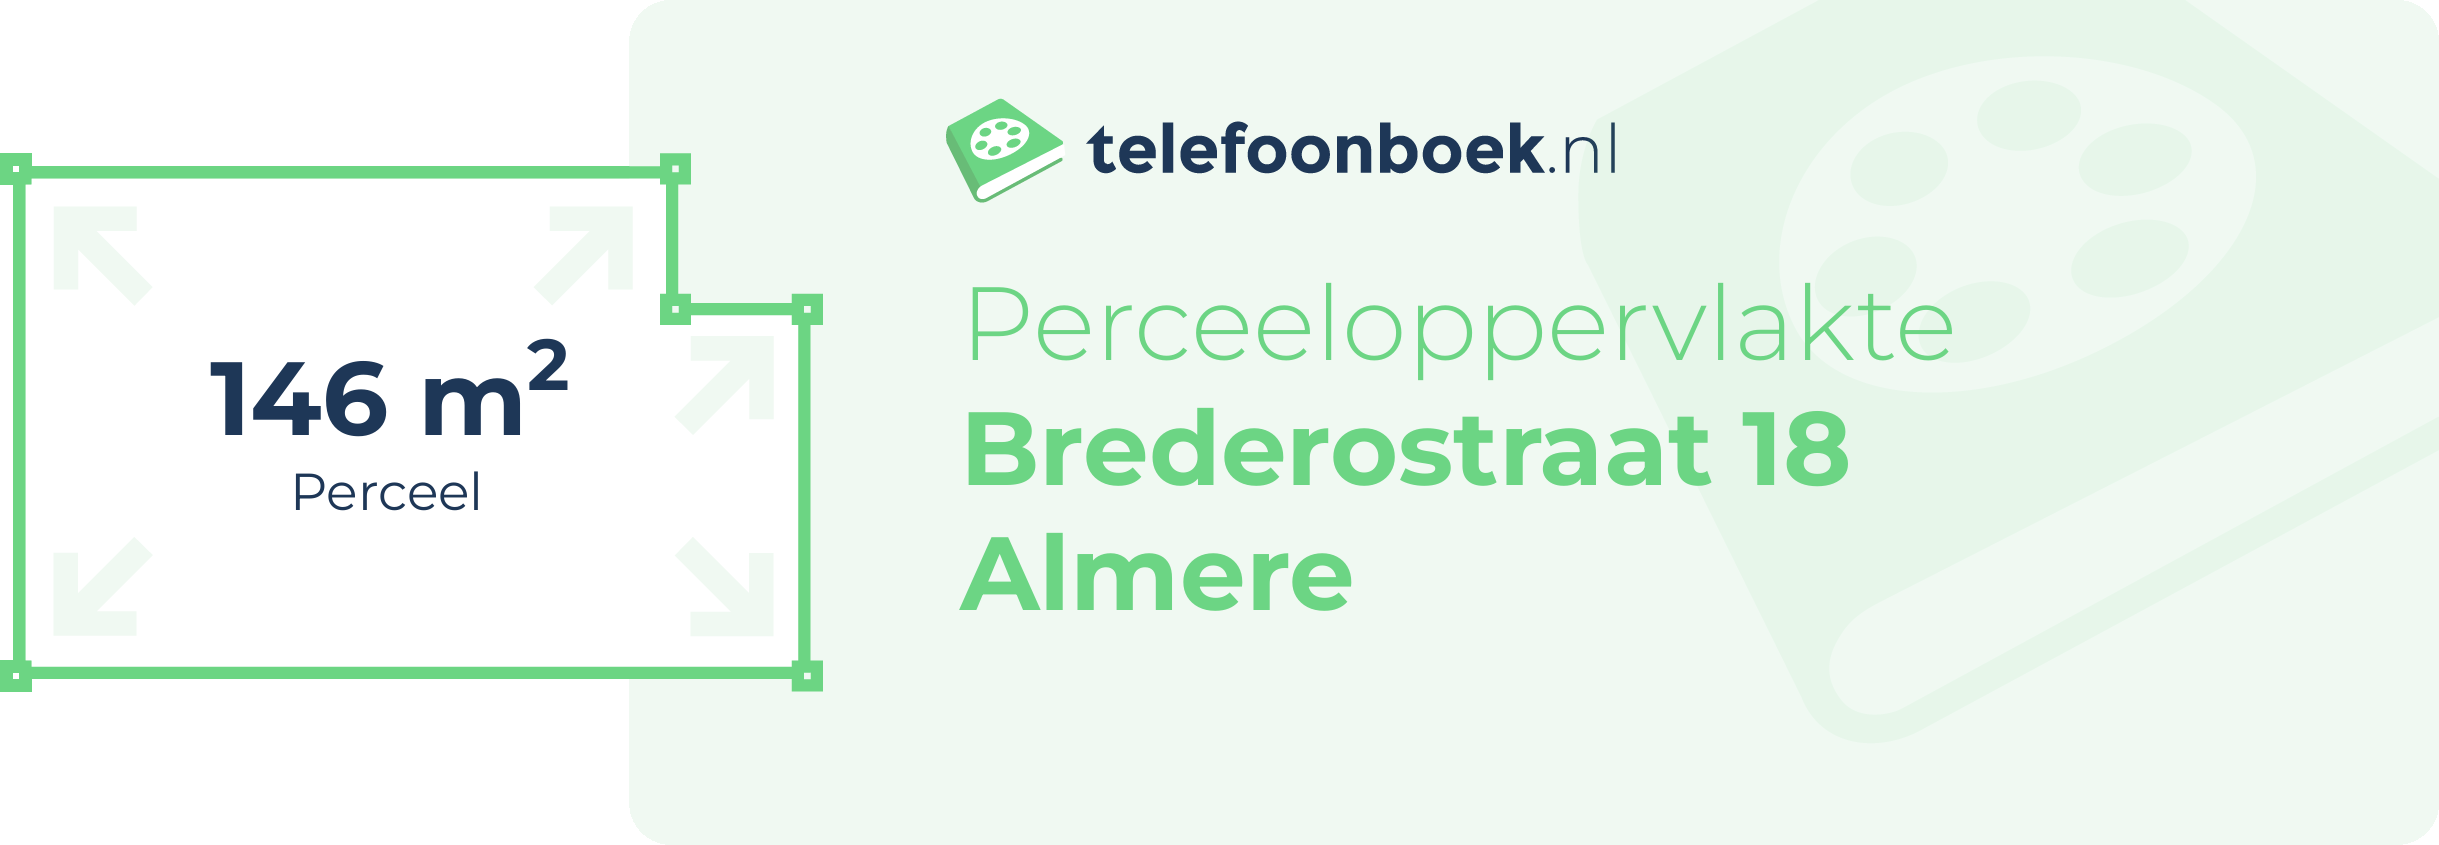 Perceeloppervlakte Brederostraat 18 Almere